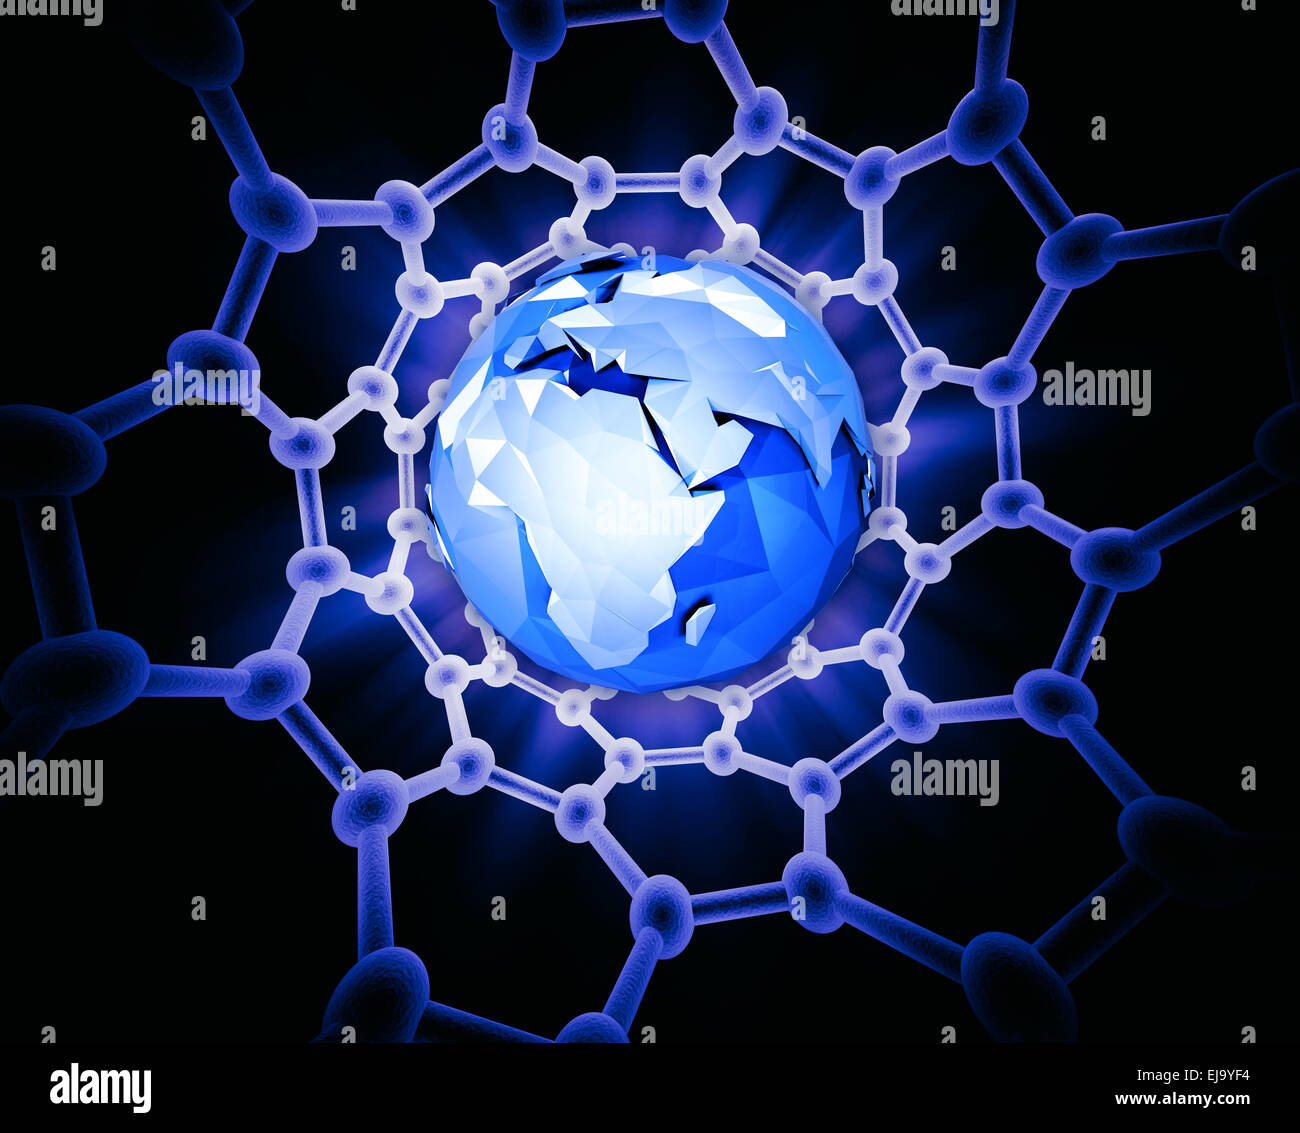 Earth inside a carbon nanotube structure - nanotechnology concept Stock Photo